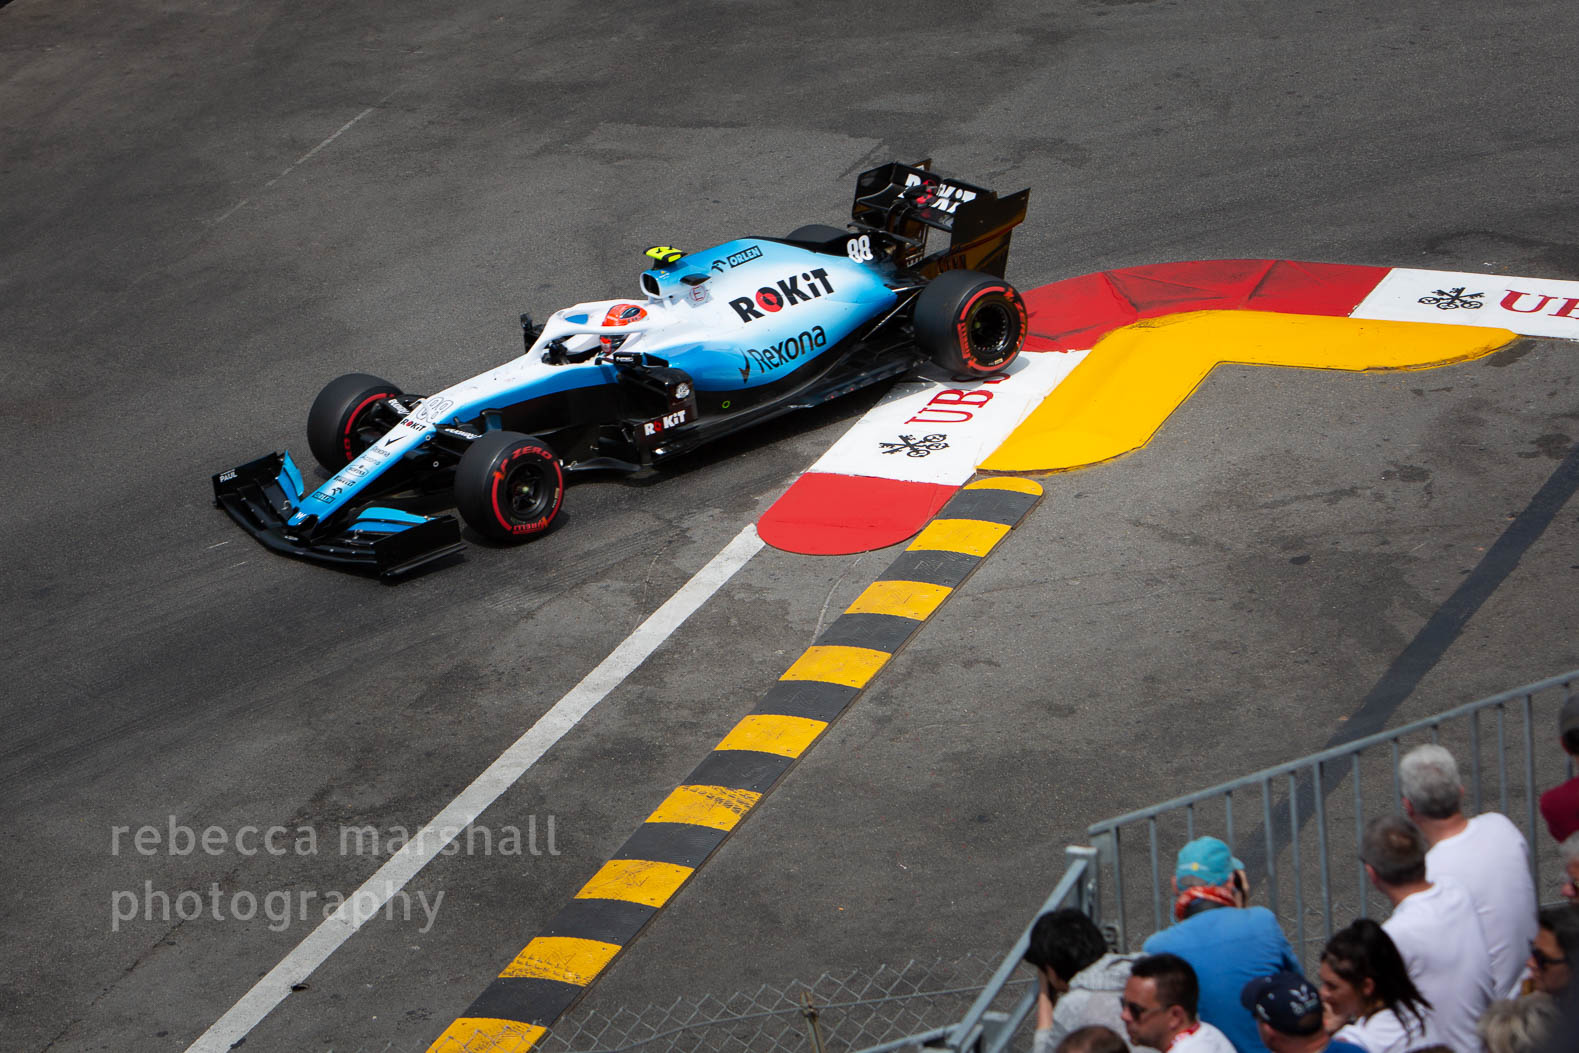 Photograph of blue Formula One racing car cornering on circuit